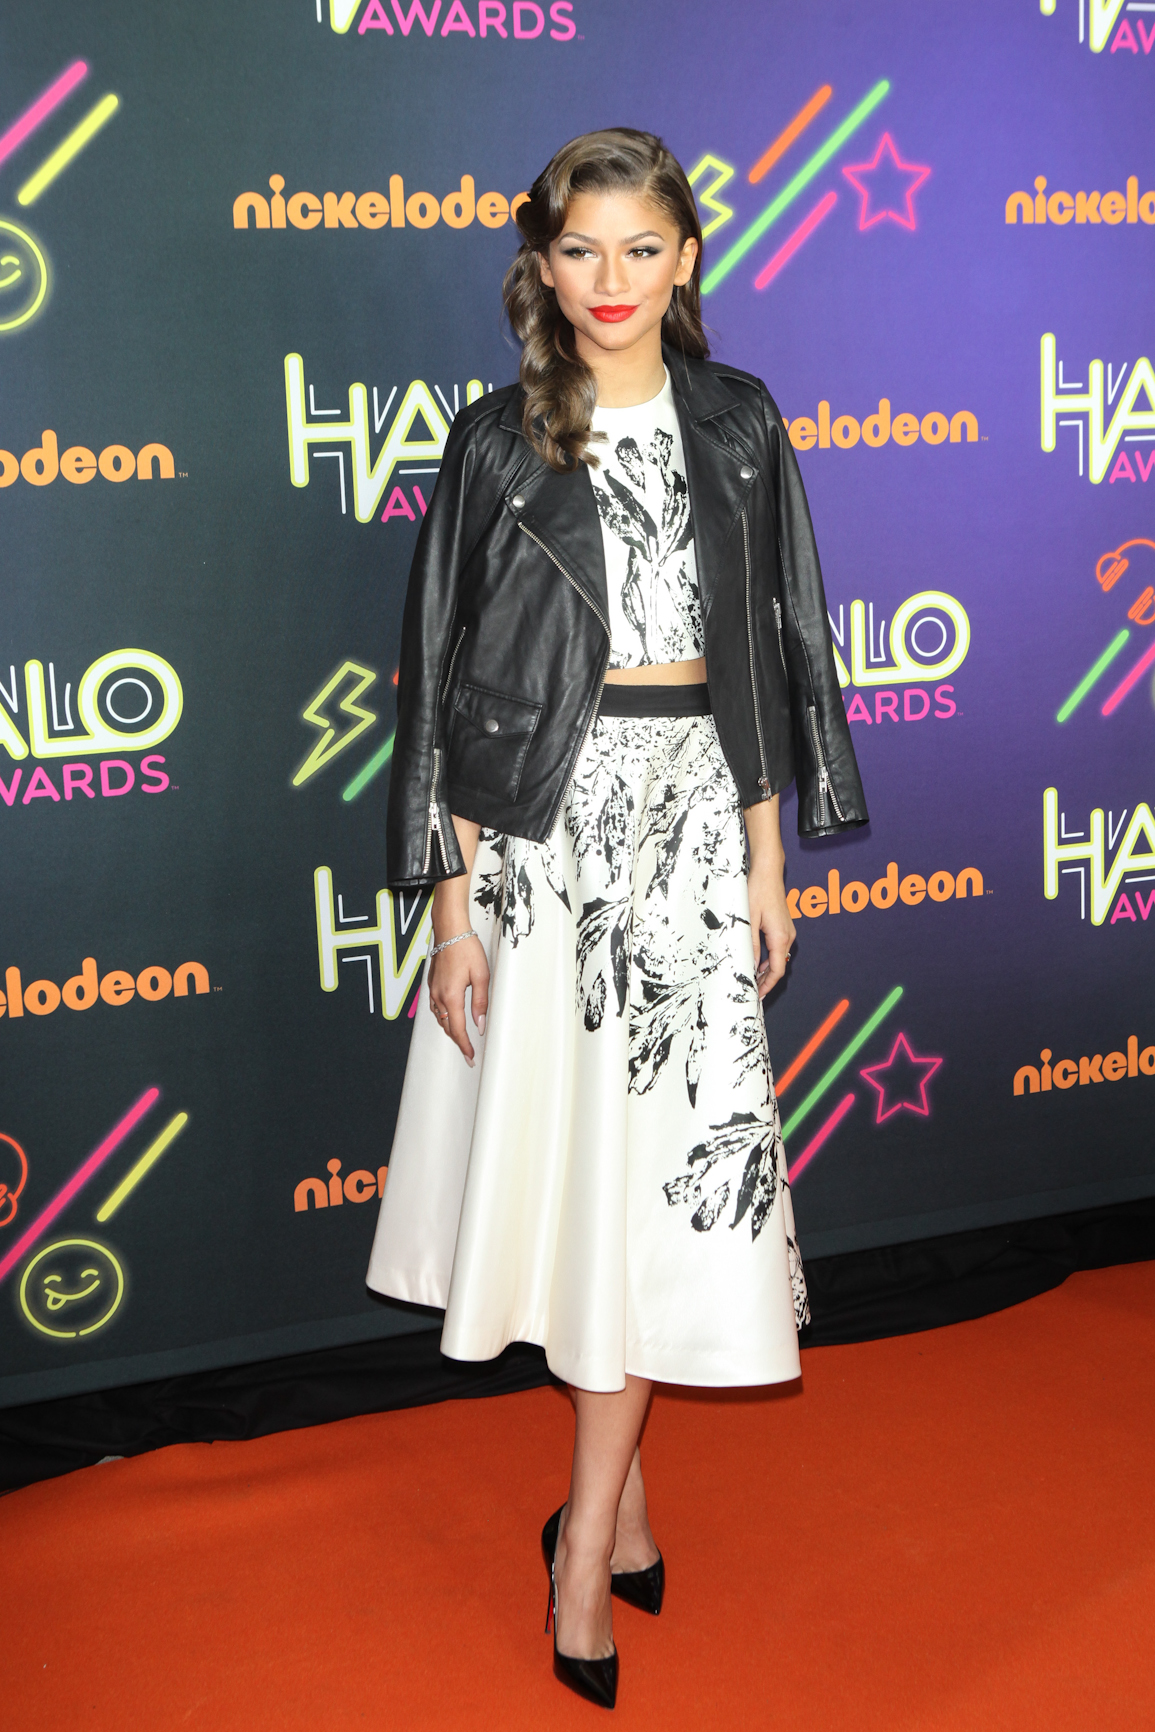 Nickelodeon Halo Awards